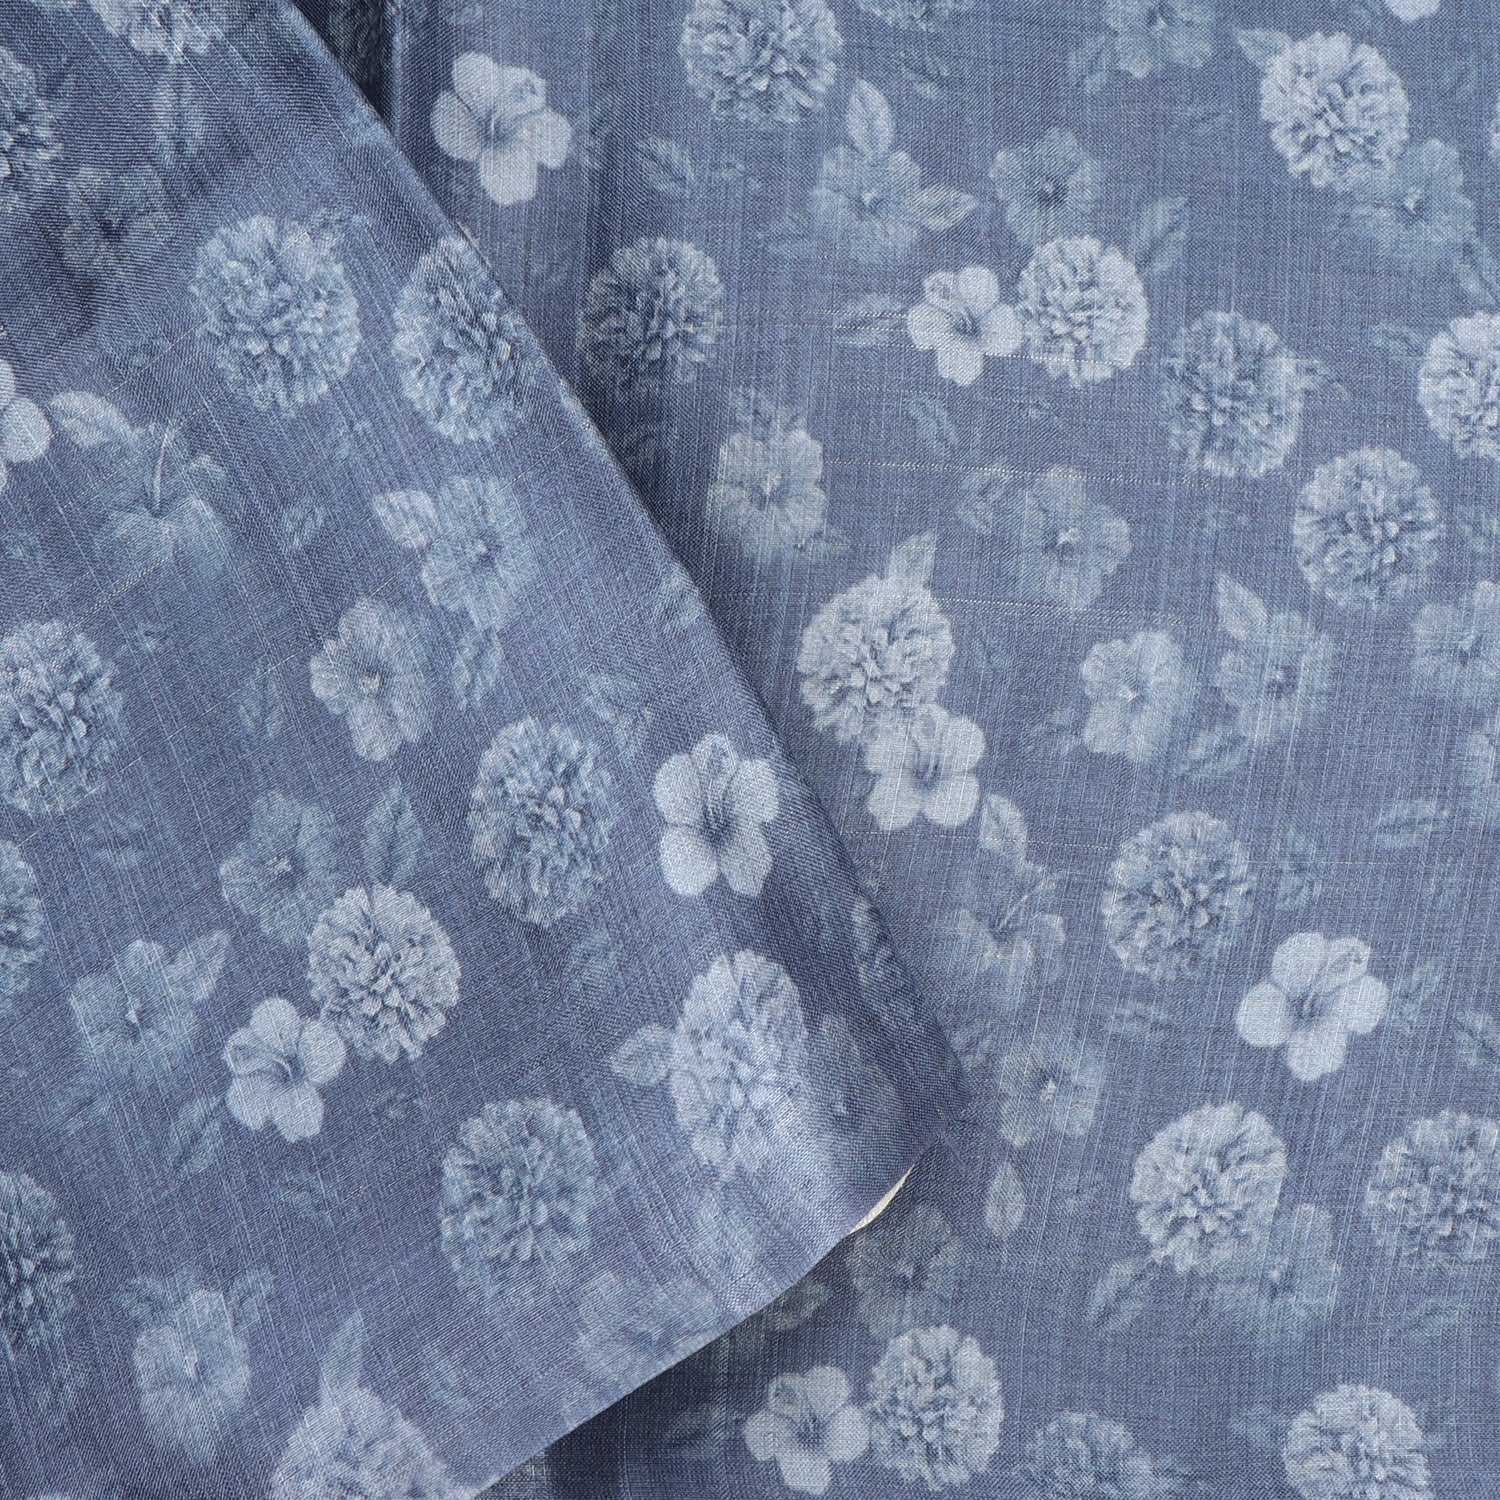 Blue Grey Tussar Saree With Floral Printed Motifs